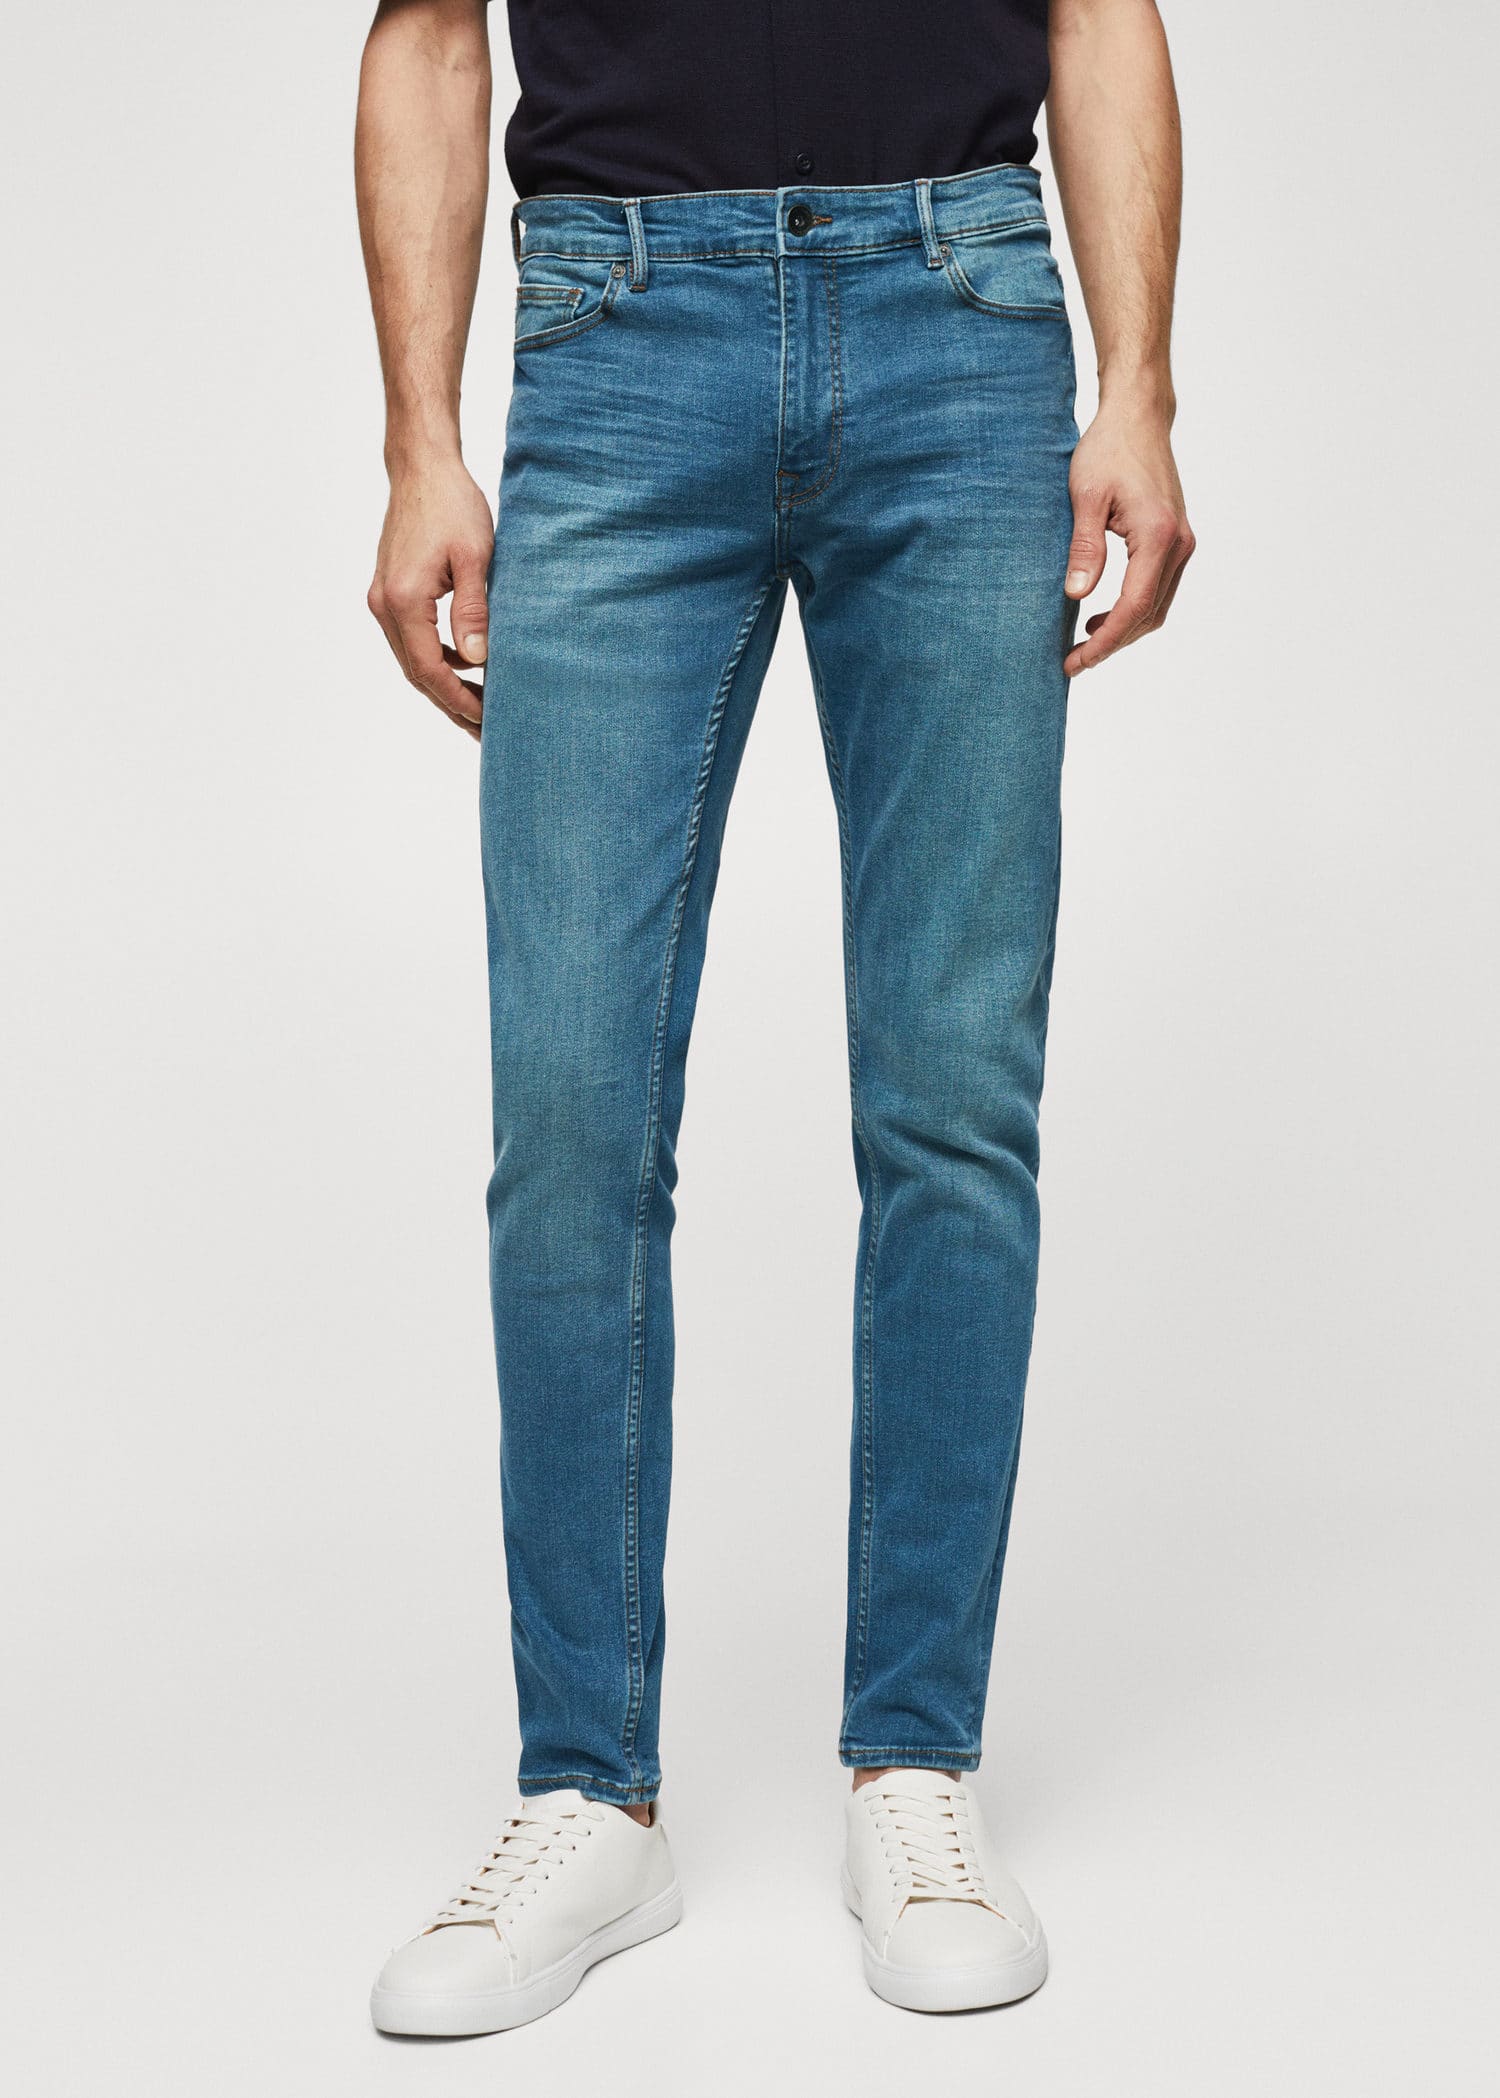 Jude skinny-fit jeans - Middenvlak